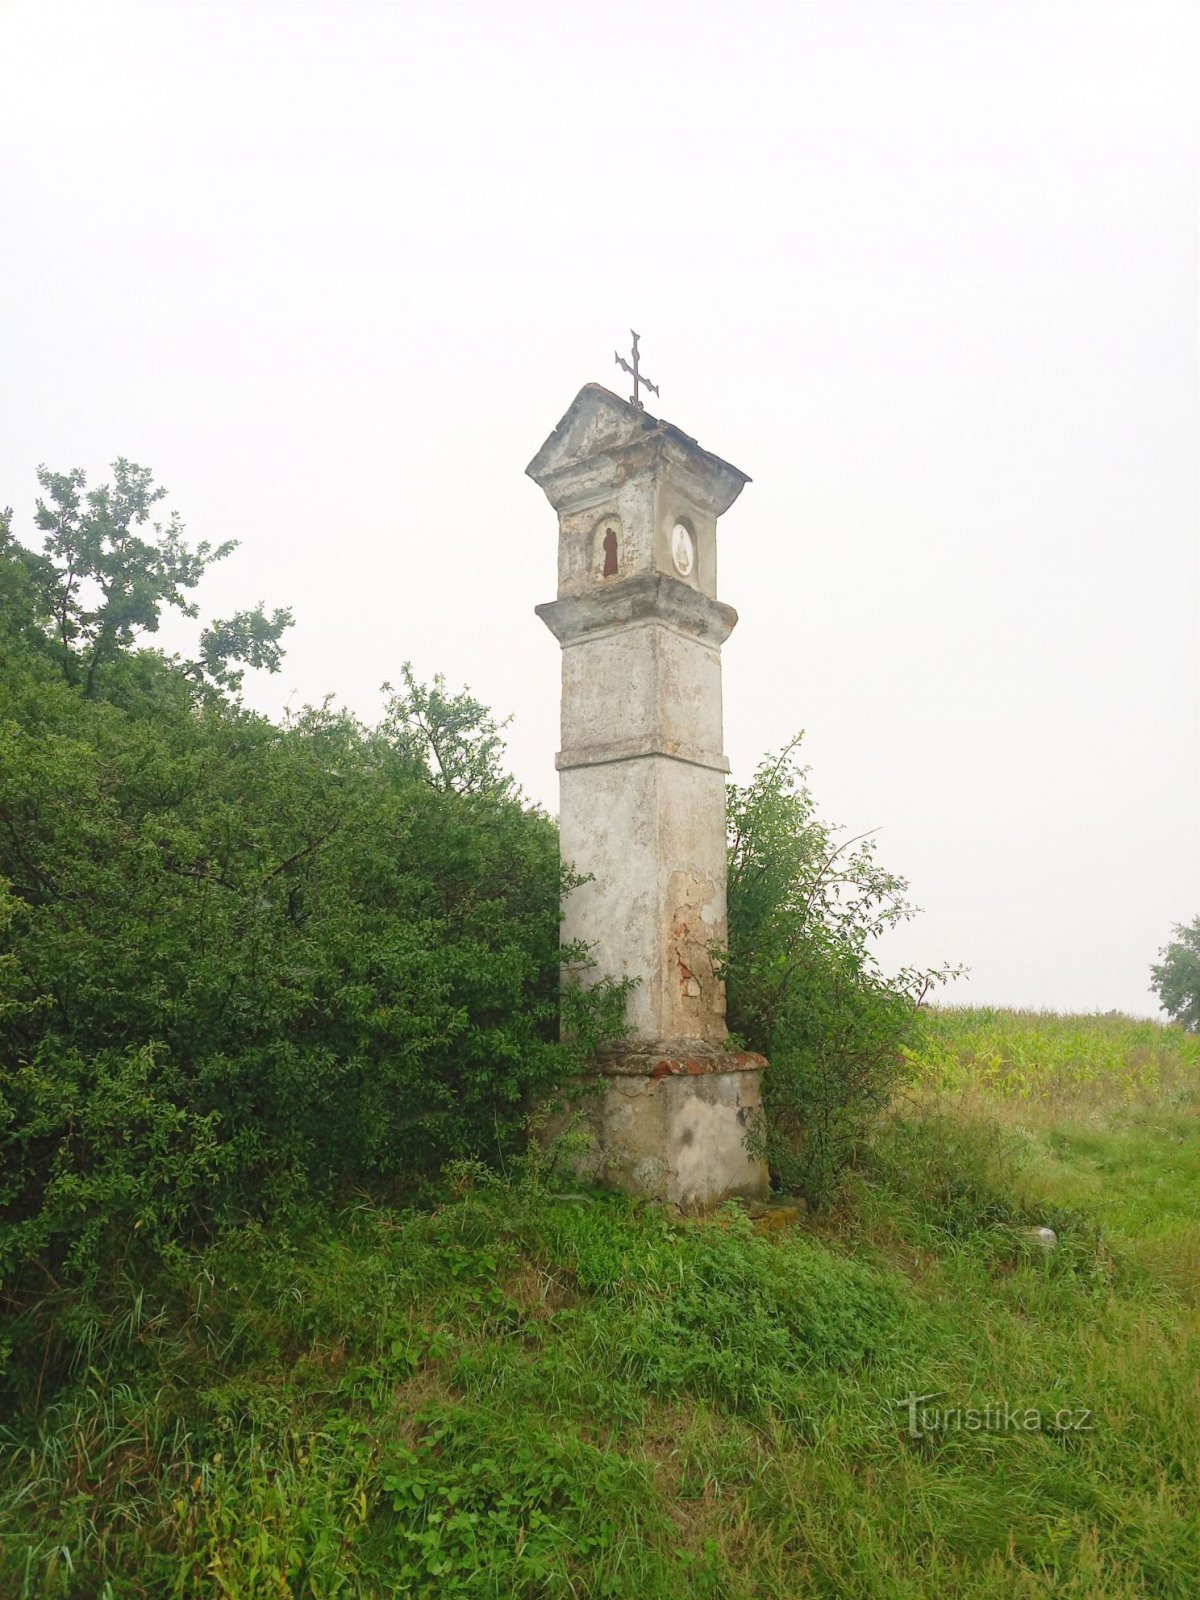 2. A agonia de pilares de tijolo perto de Kňovice da virada dos séculos XVIII e XIX